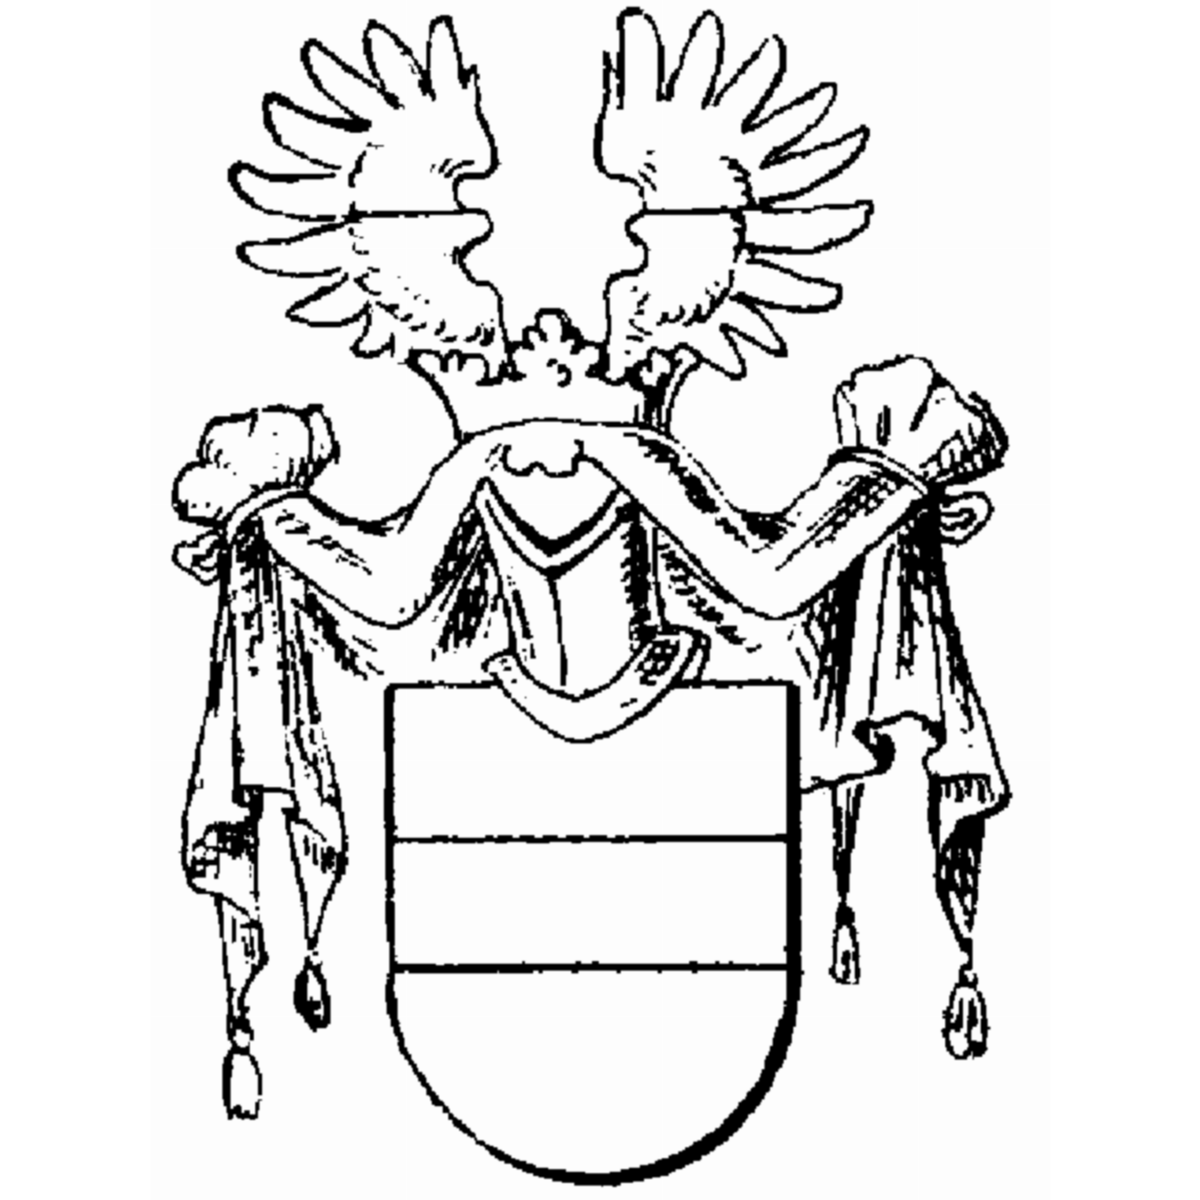 Wappen der Familie Zschetzsche